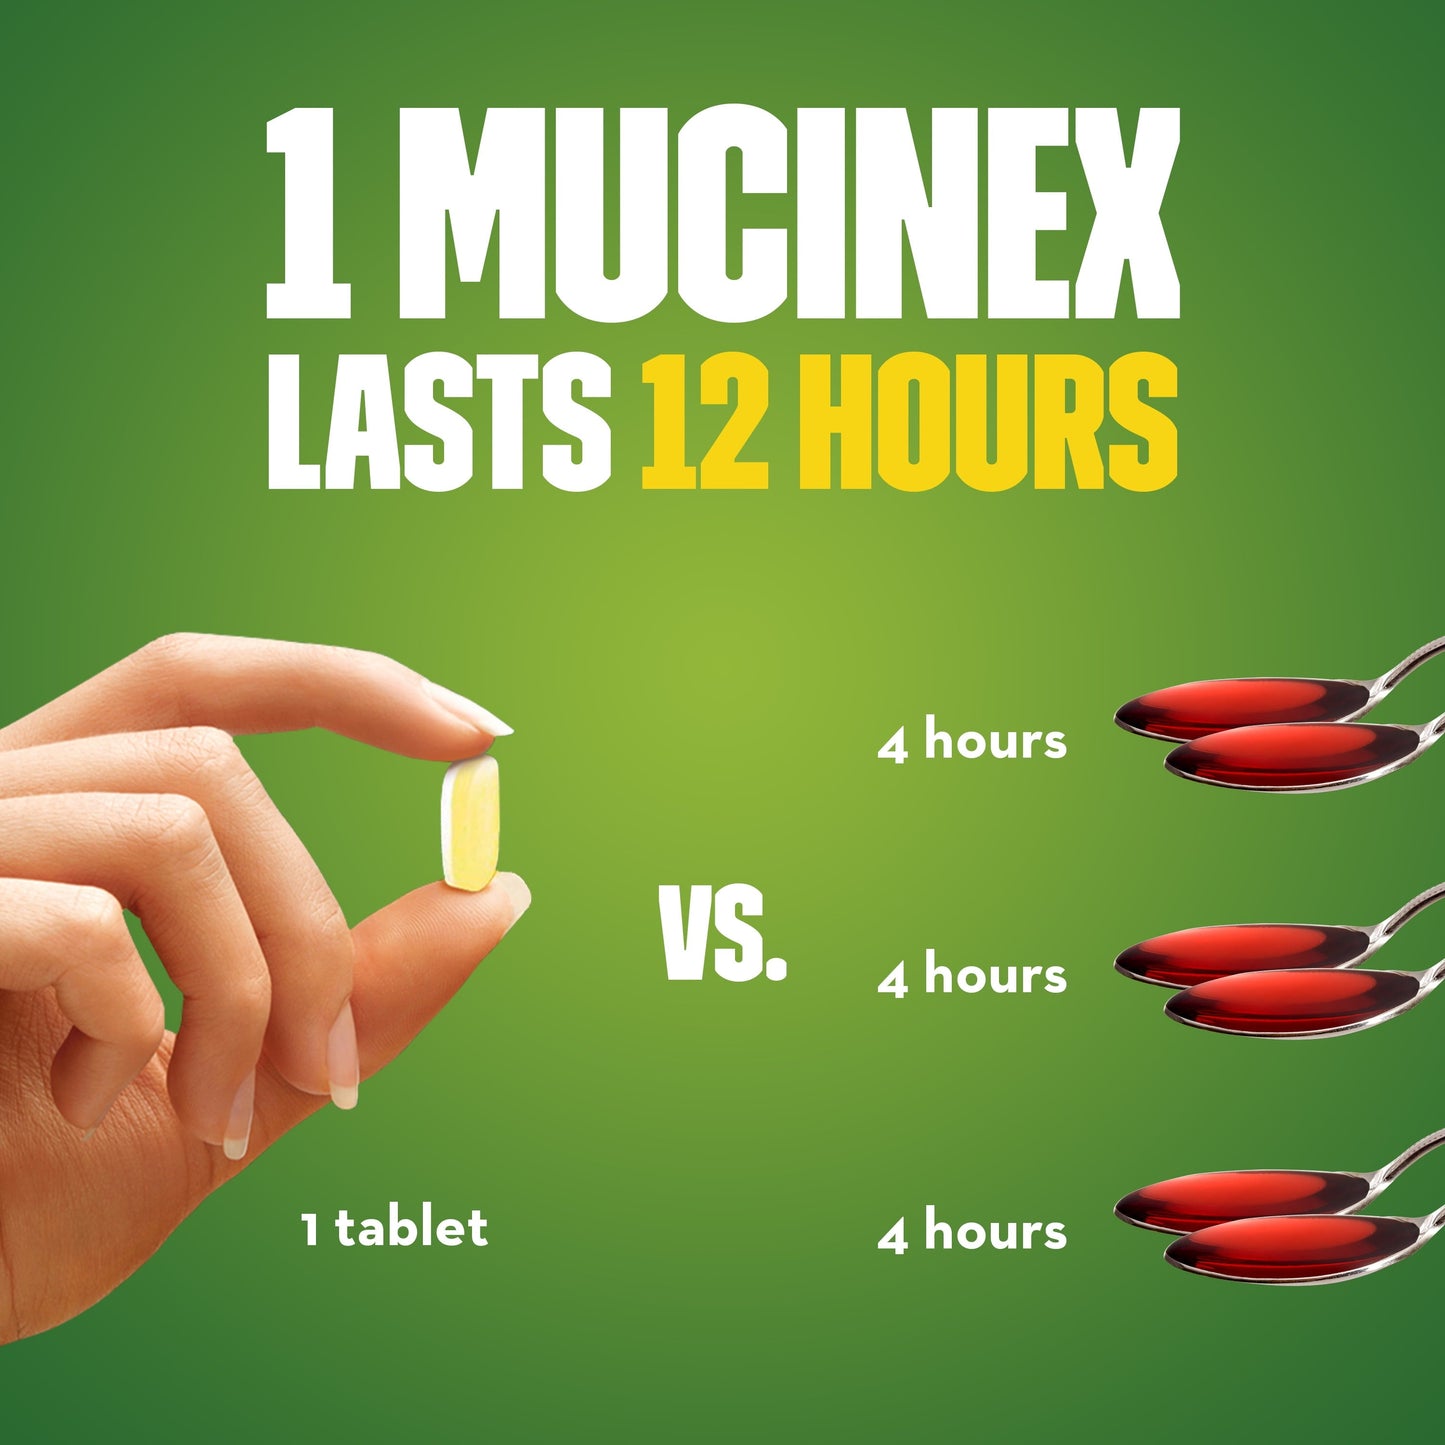 Mucinex 12 Hour Relief, DM Maximum Strength Cough Medicine, 28 Tablets